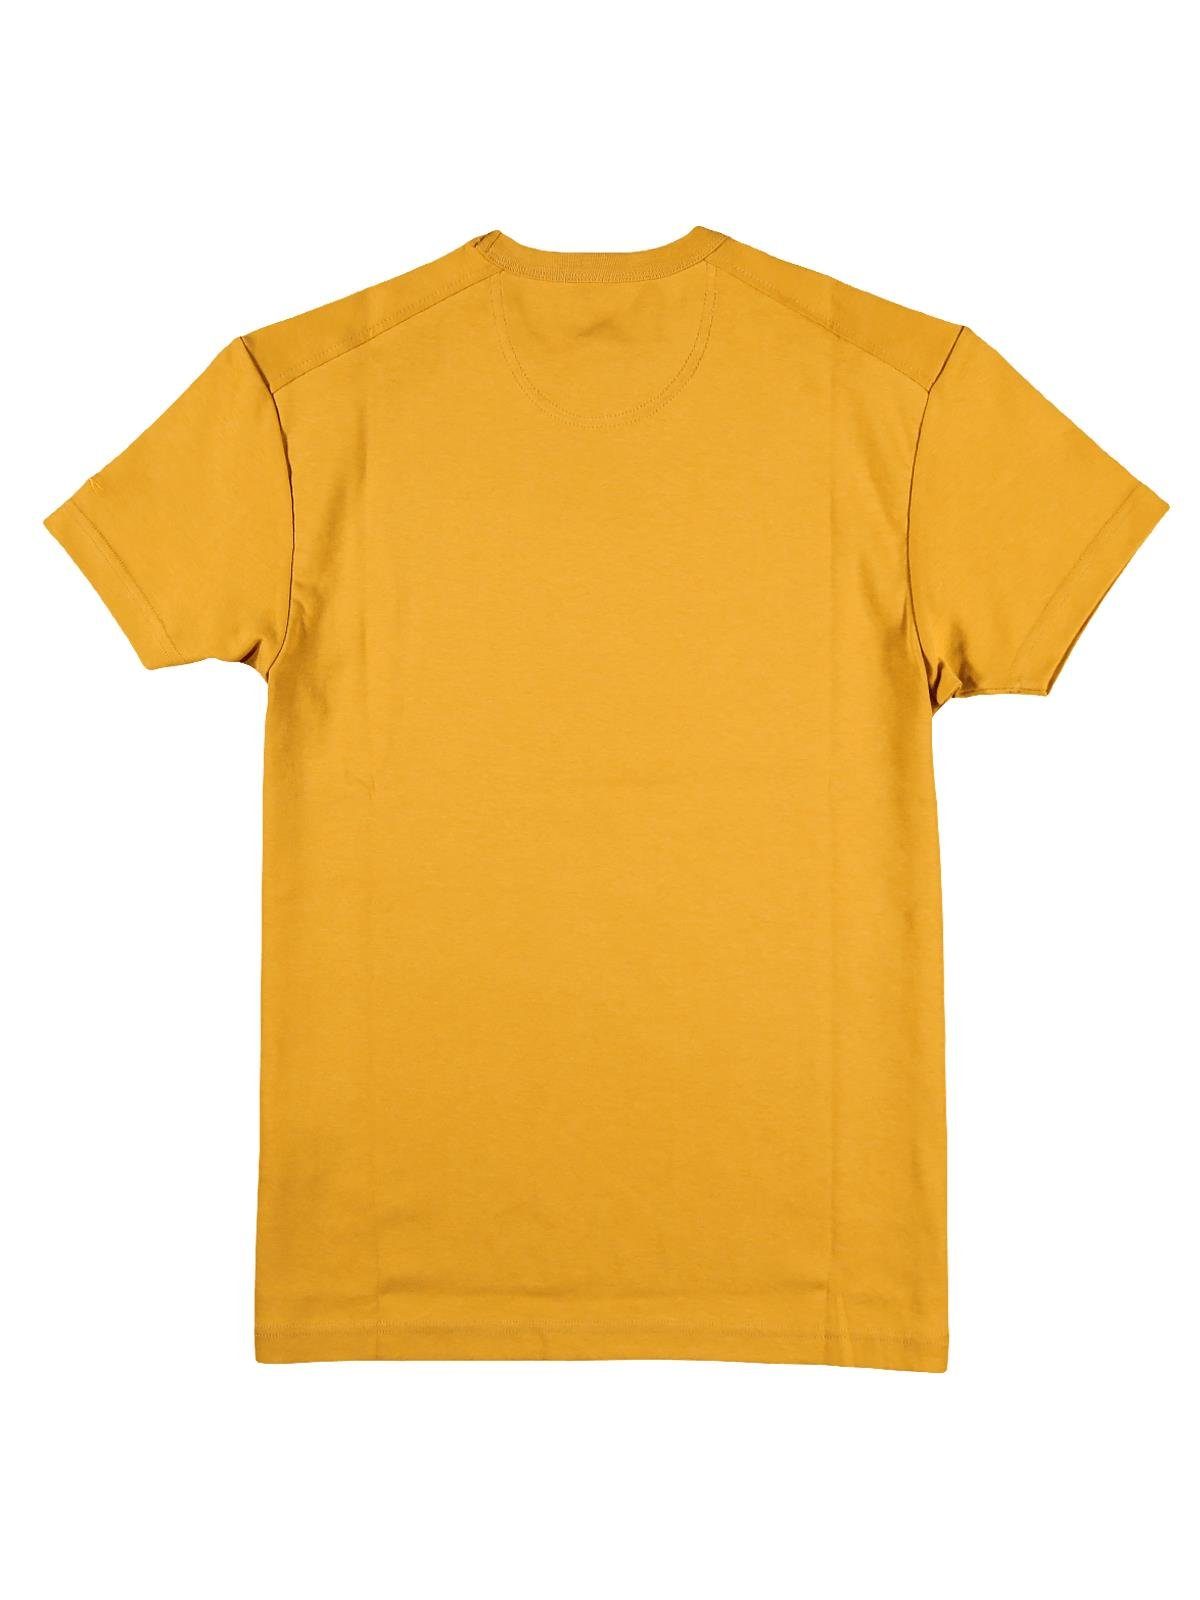 "My T-Shirt Favorite" T-Shirt Engbers